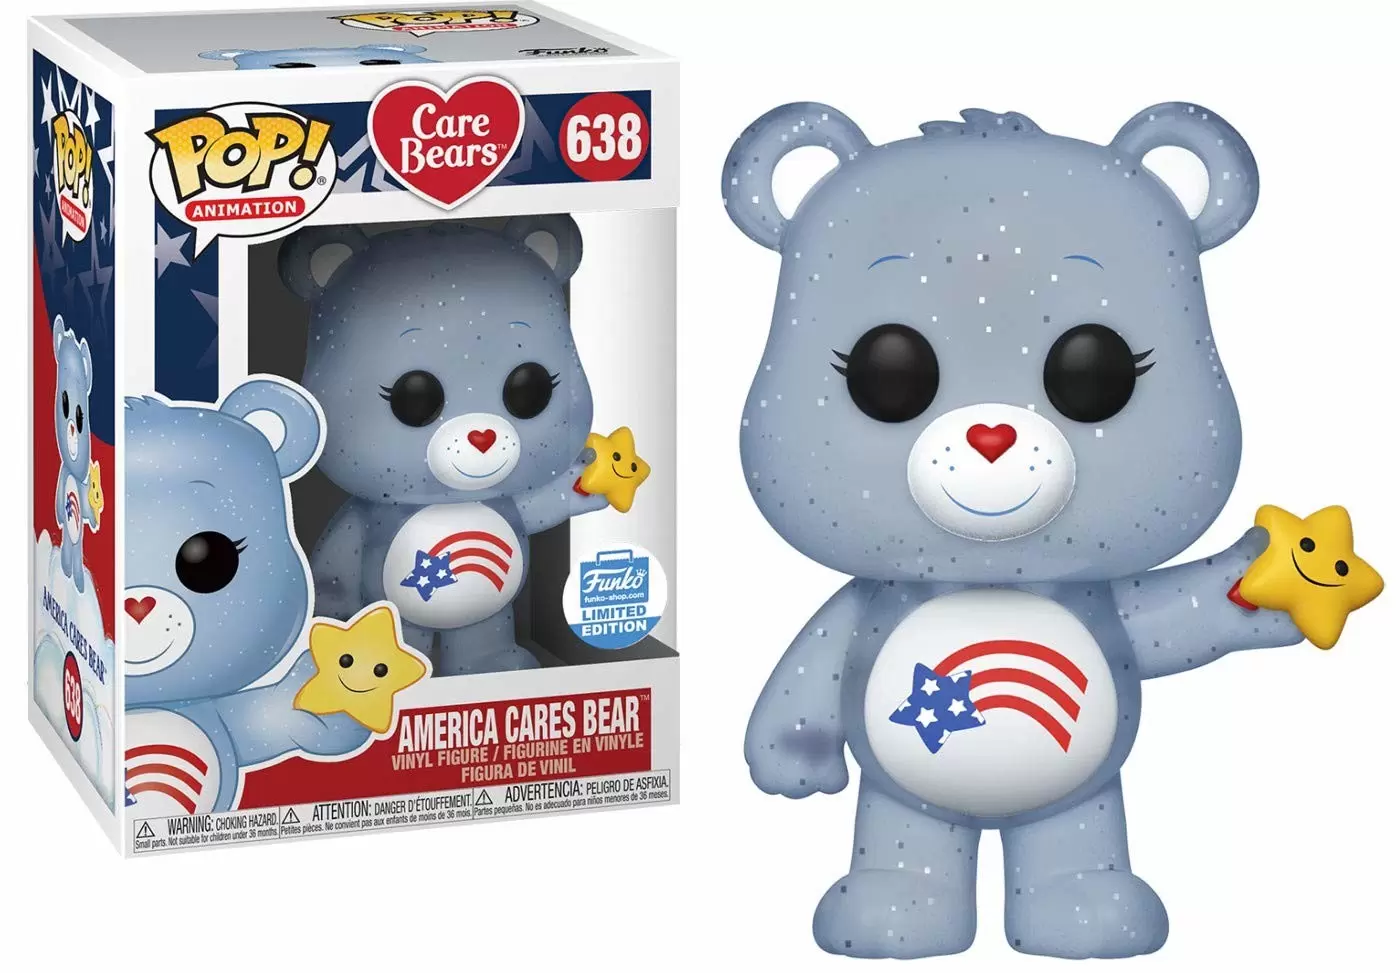 POP! Animation - Care Bears - America Cares Bear